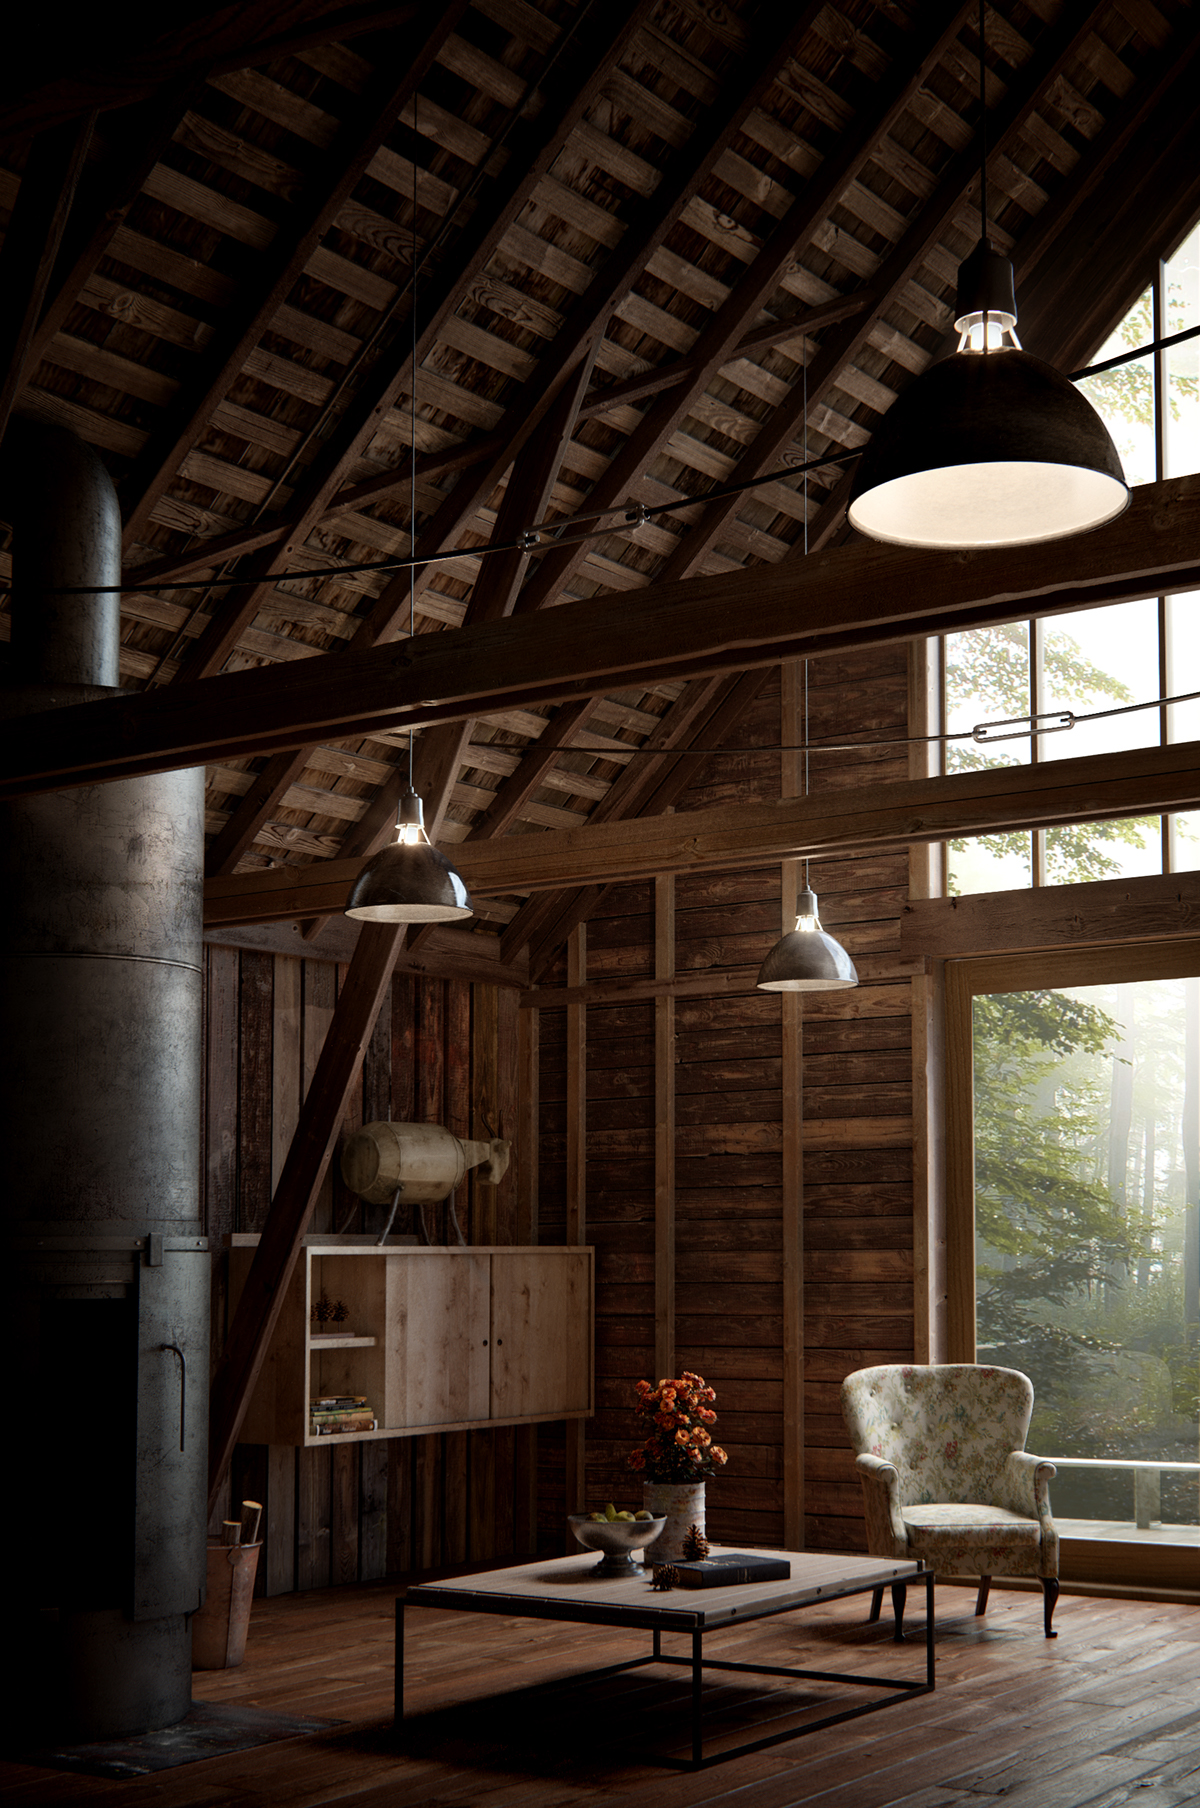 CG 3dsmax corona corona render  Interior barn wood renovation chalet LOFT